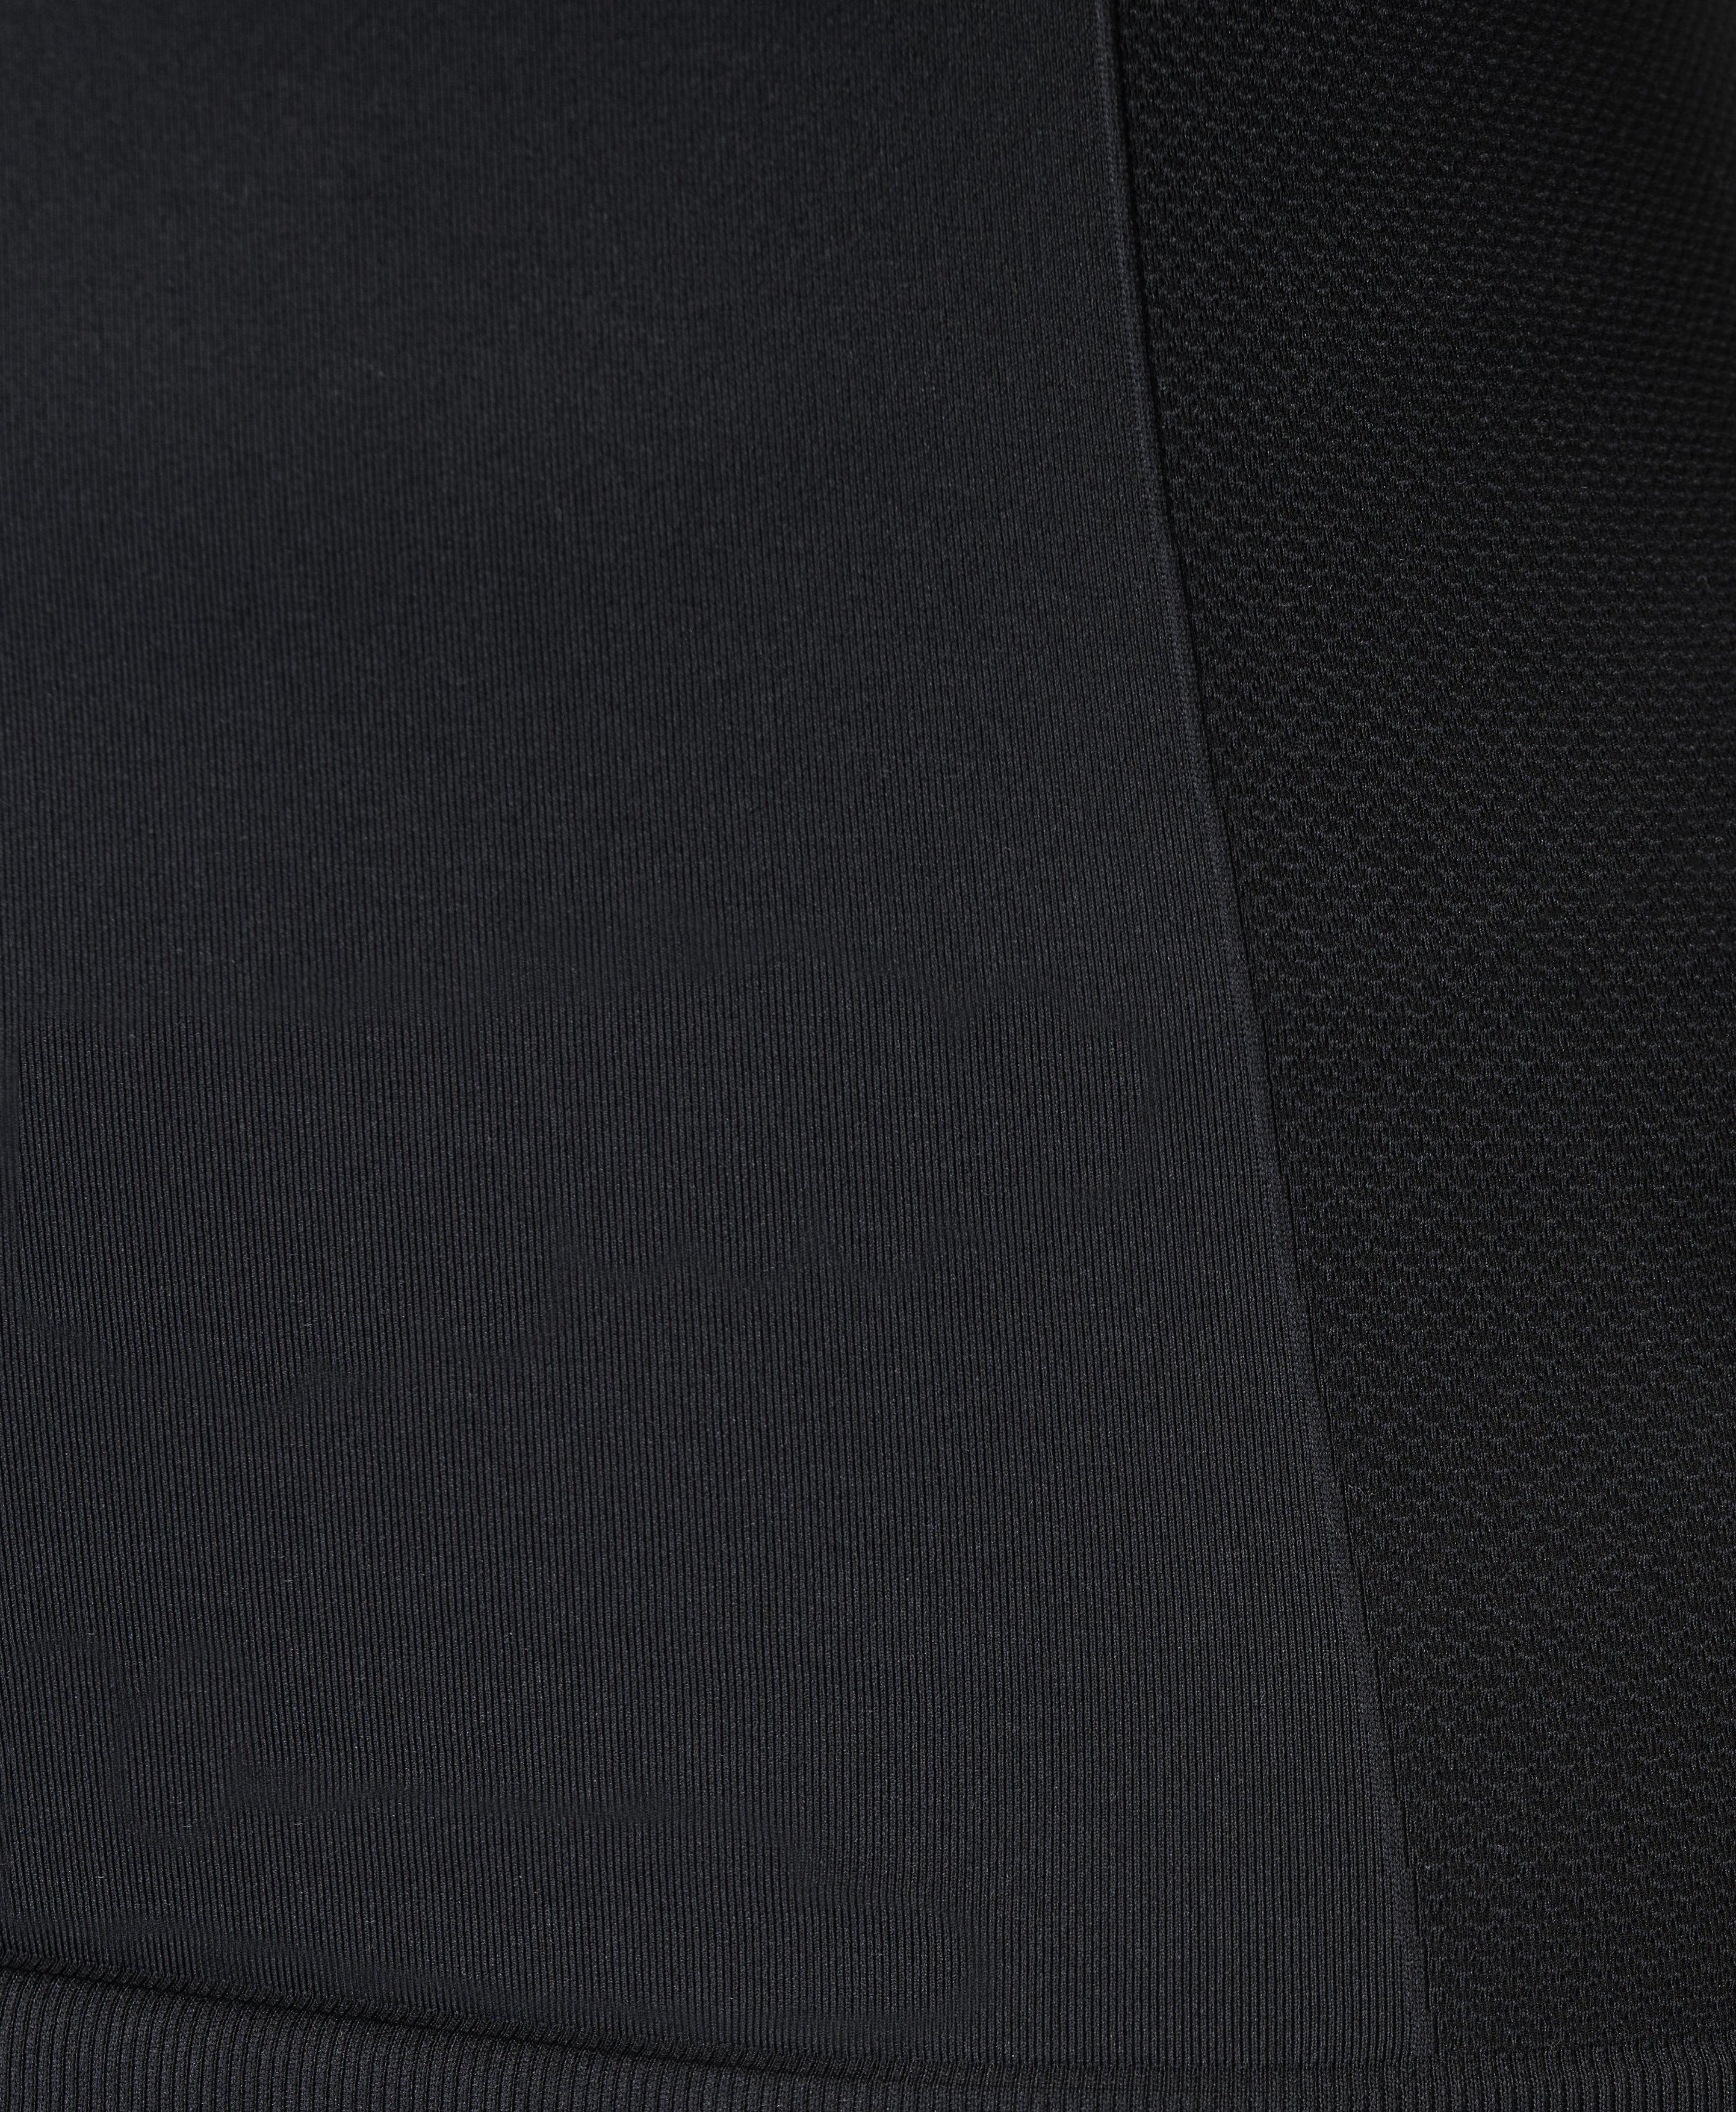 Athlete Hooded Long Sleeve Top - Black, Women's Base Layers & Long Sleeve  Tops